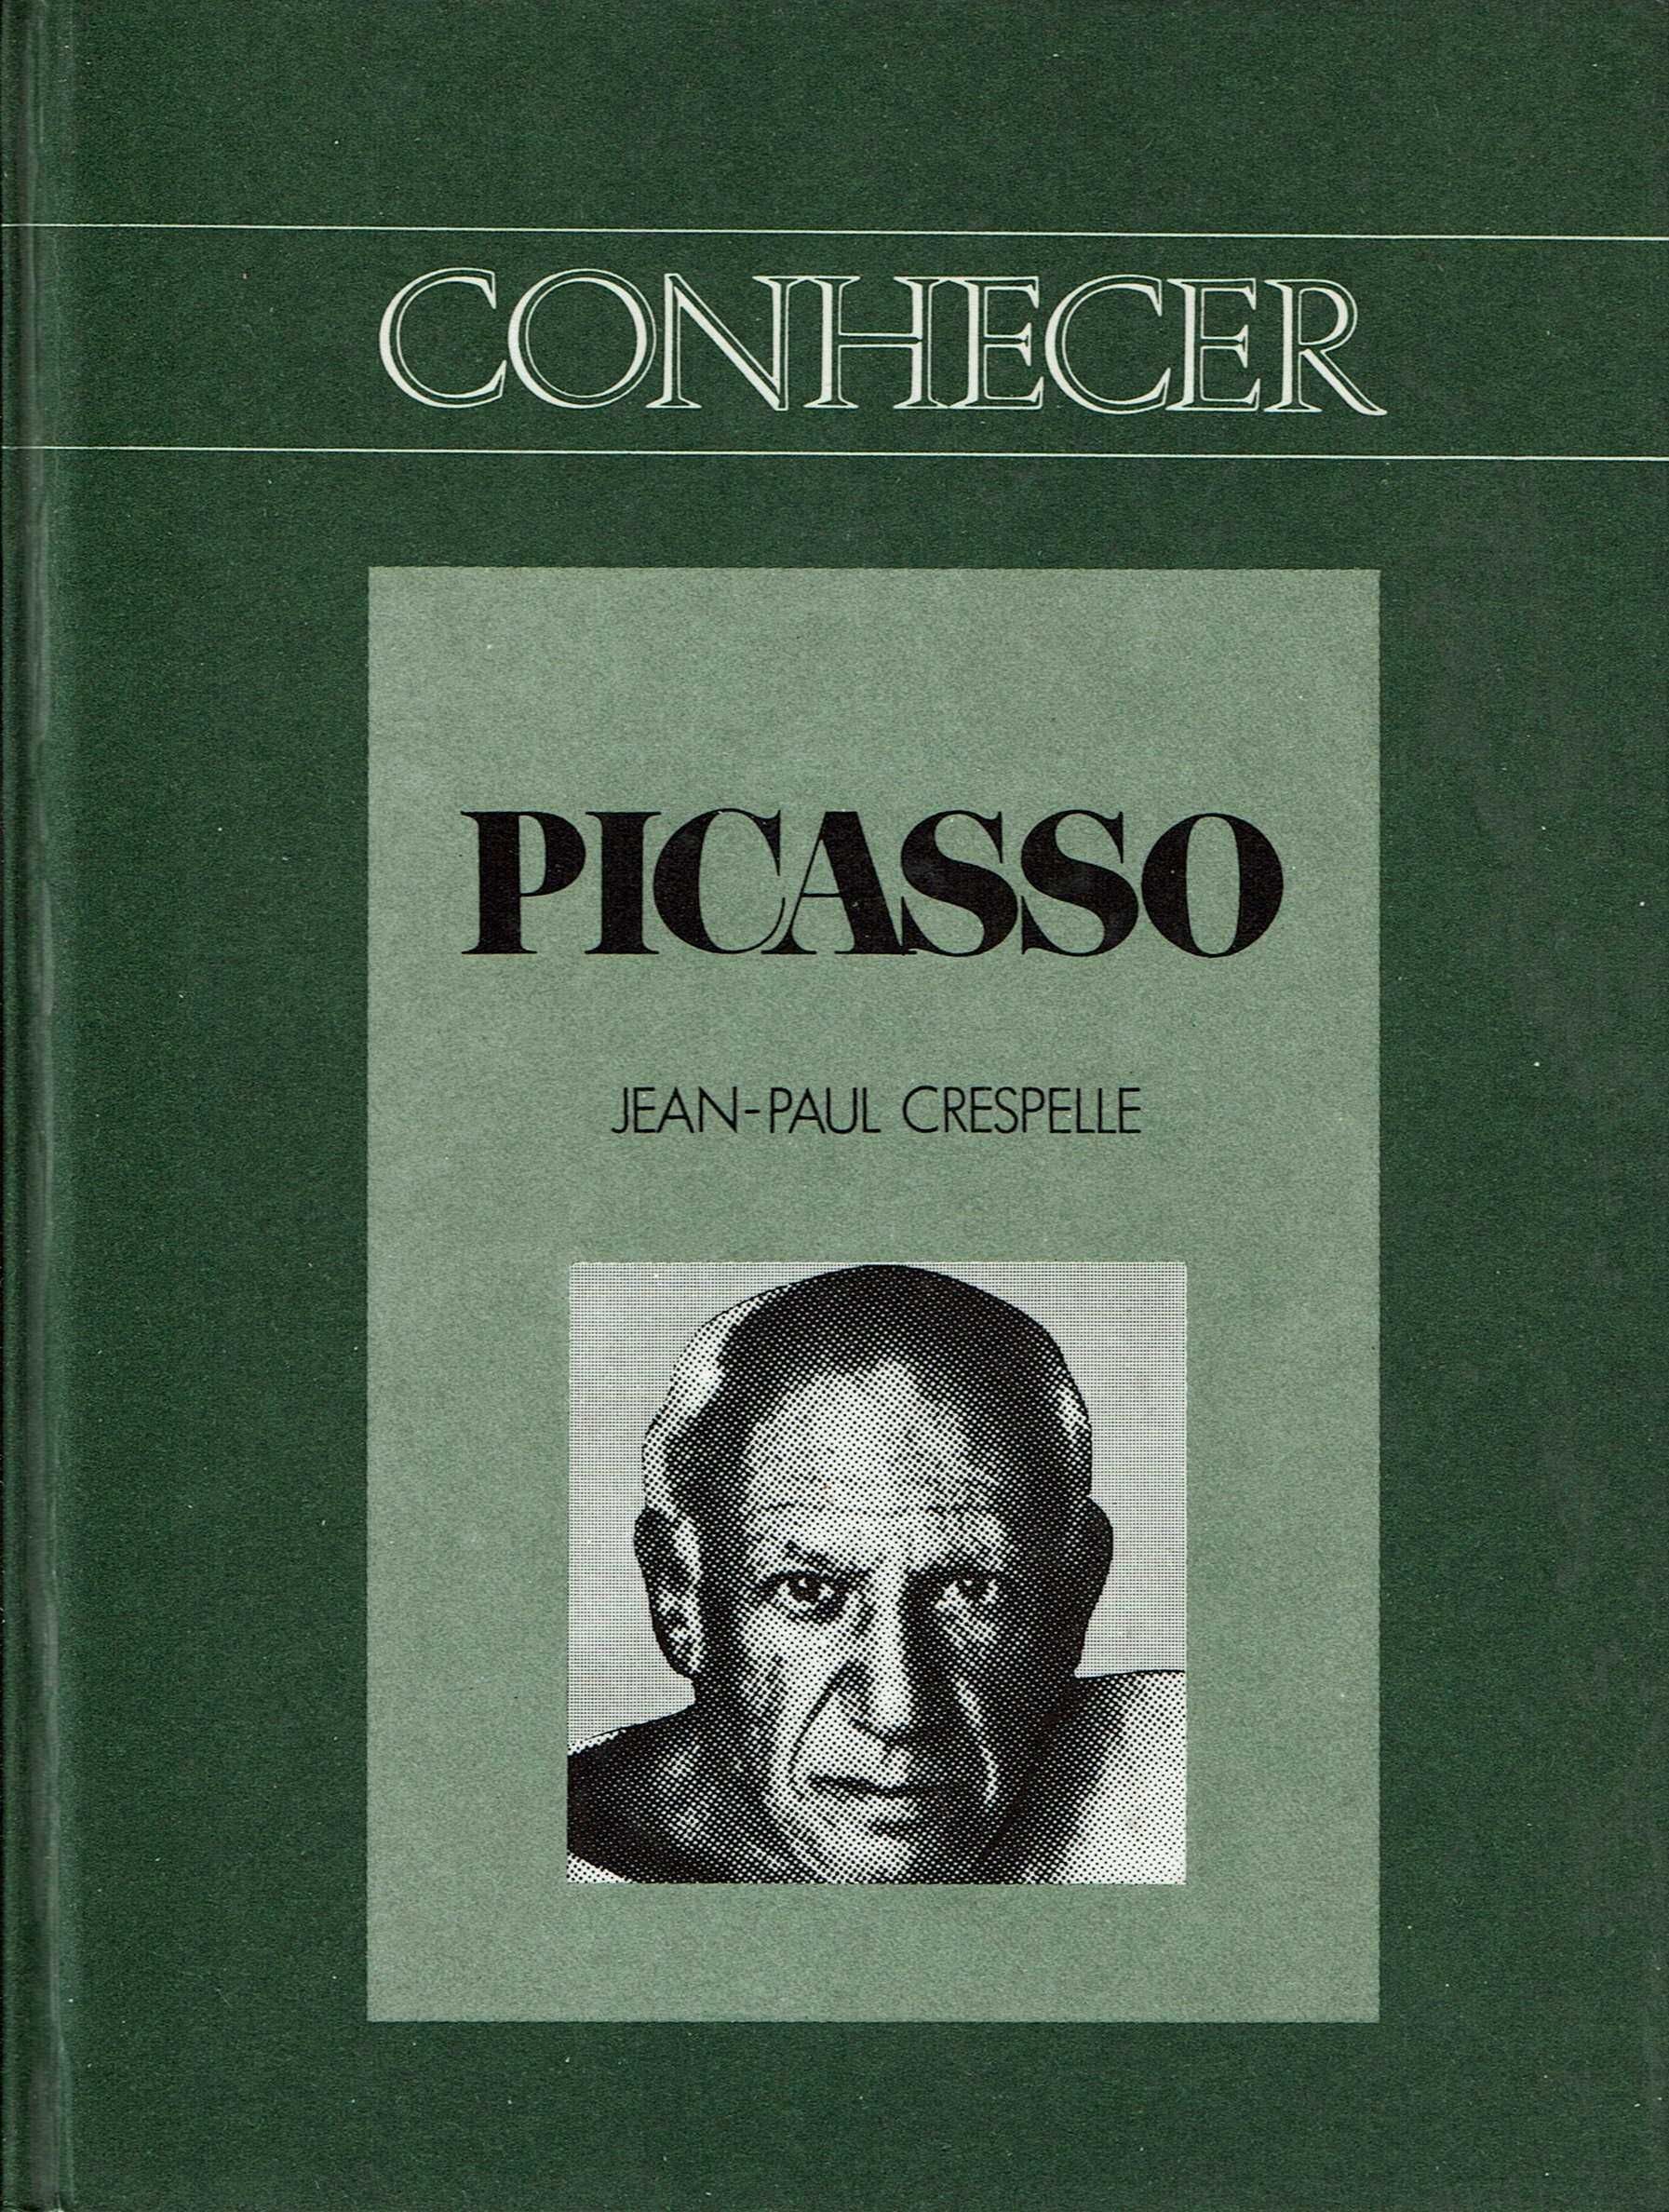 "Conhecer Picasso" - Jean-Paul Crespelle